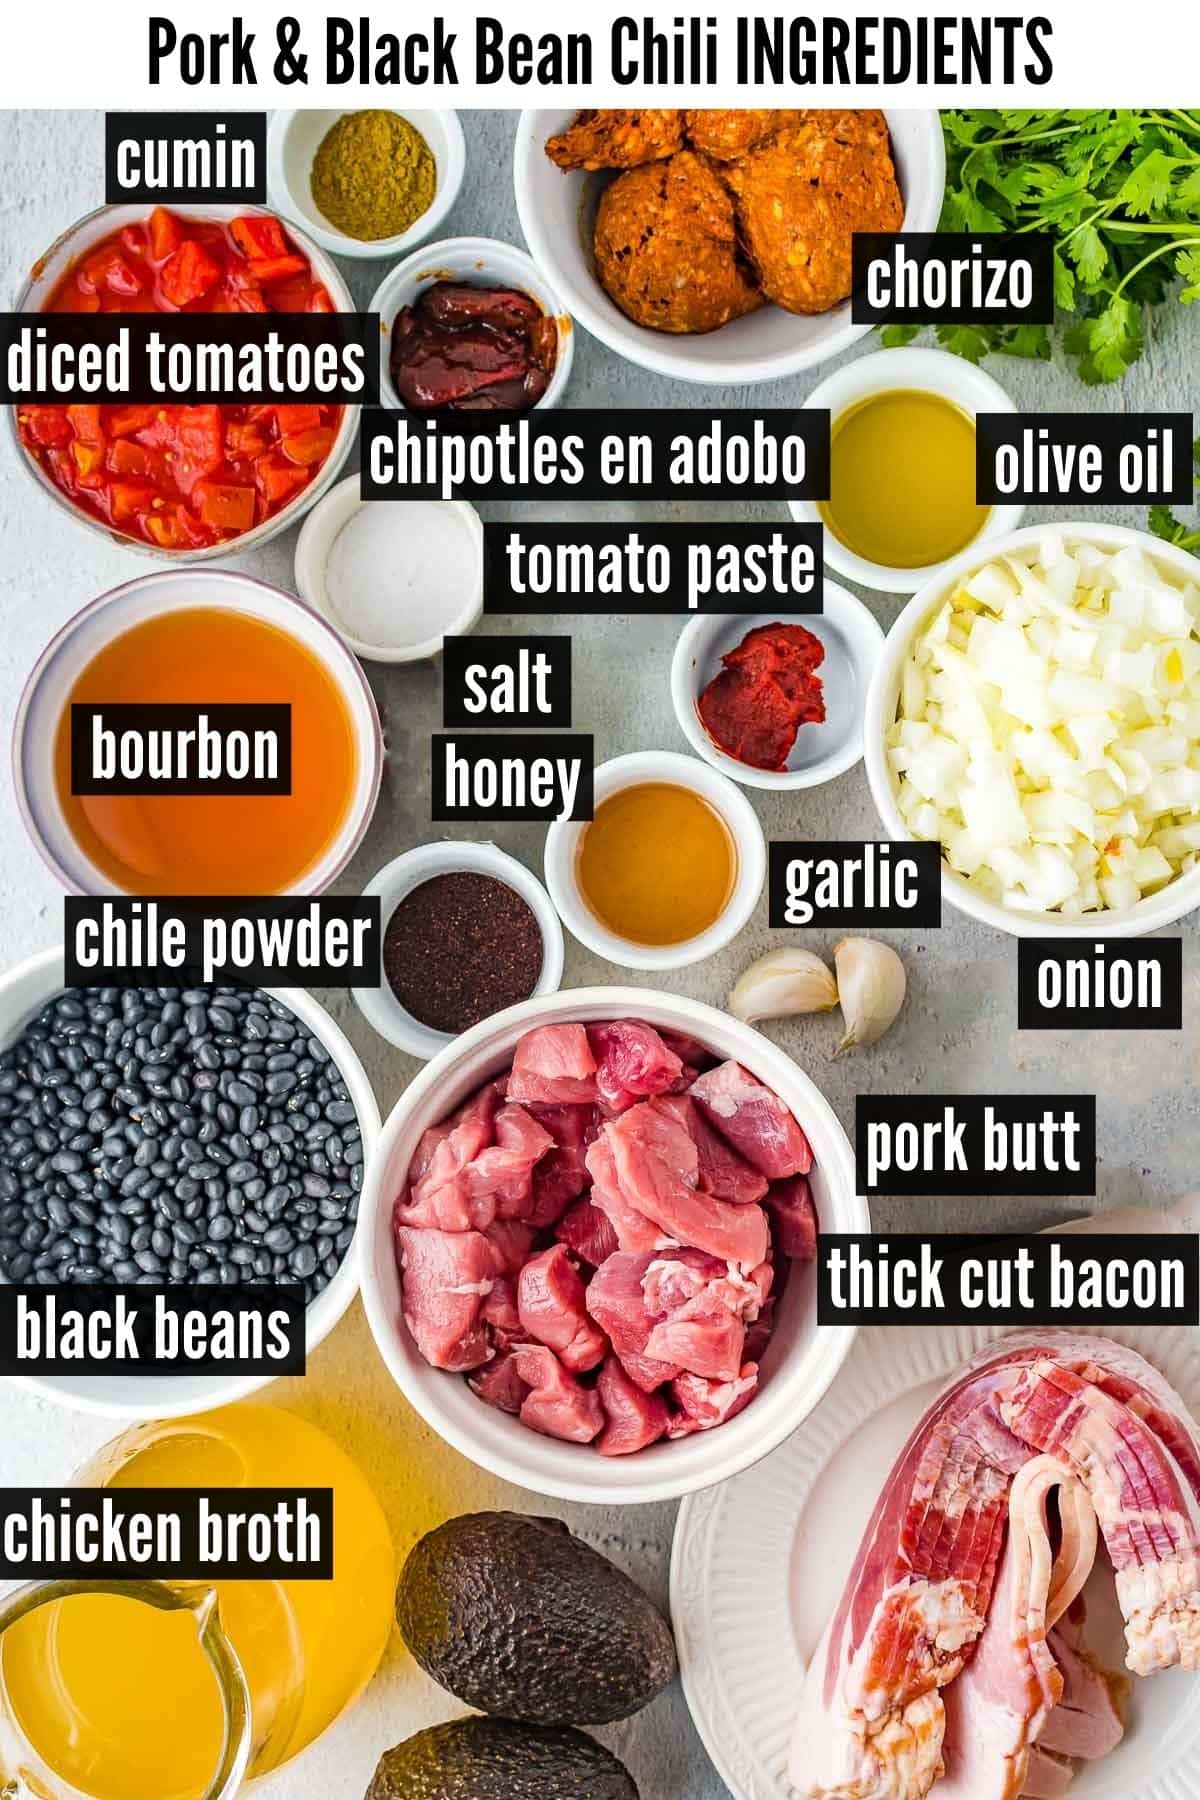 pork chili labelled ingredients